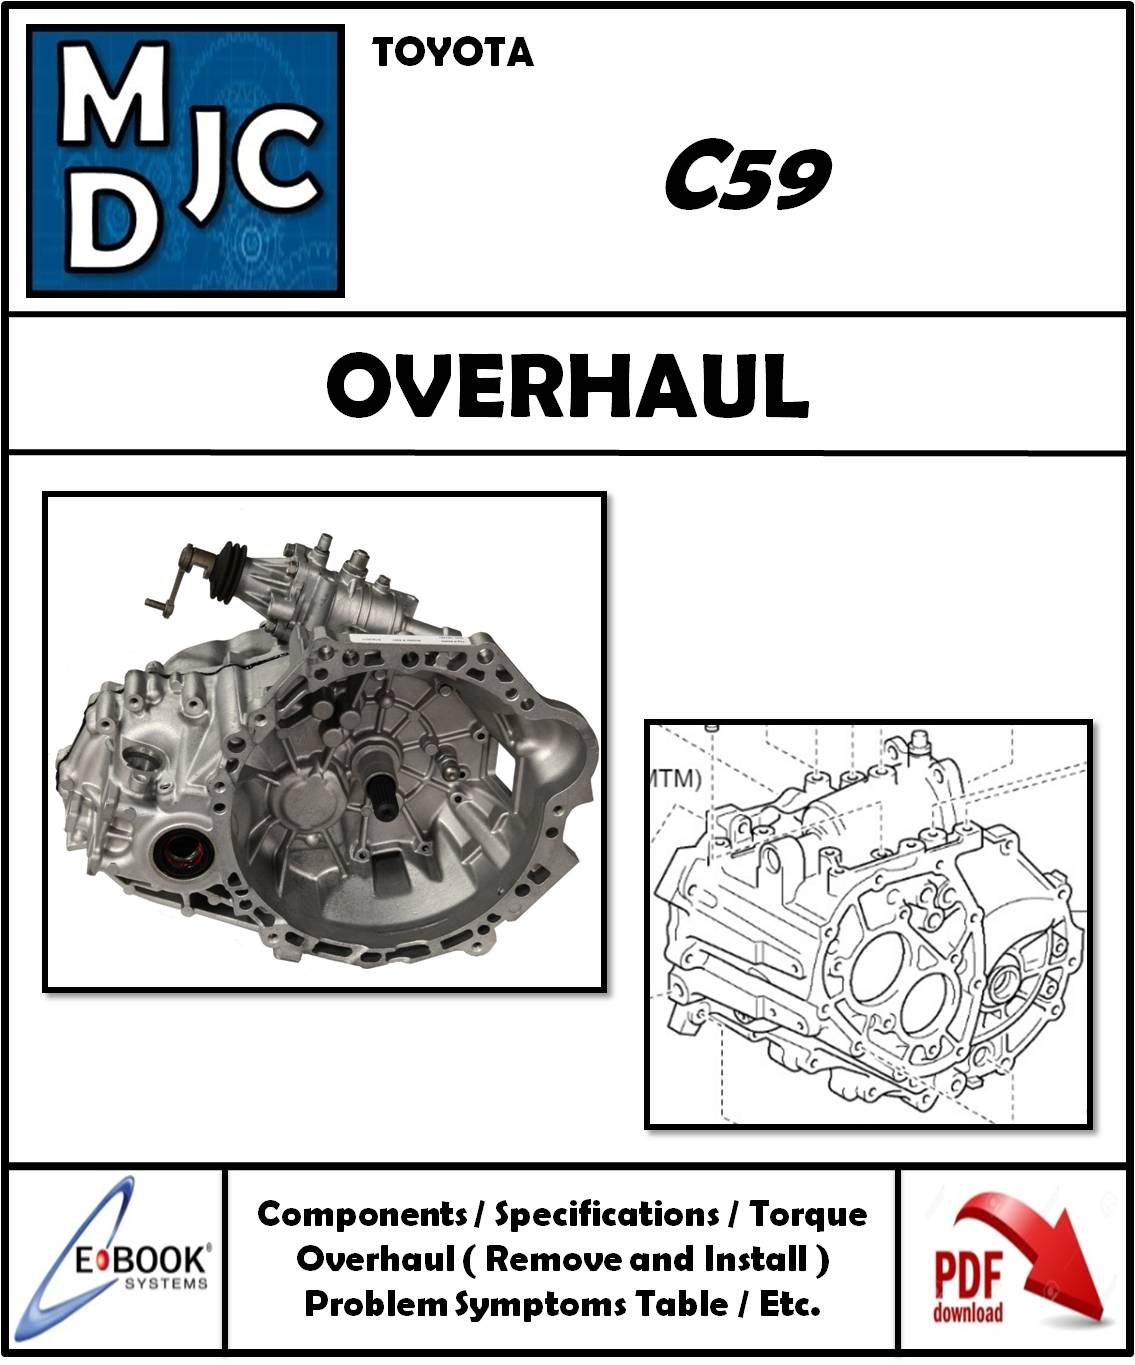 Manual de Taller (Overhaul) Caja Manual (transmission) Toyota C59